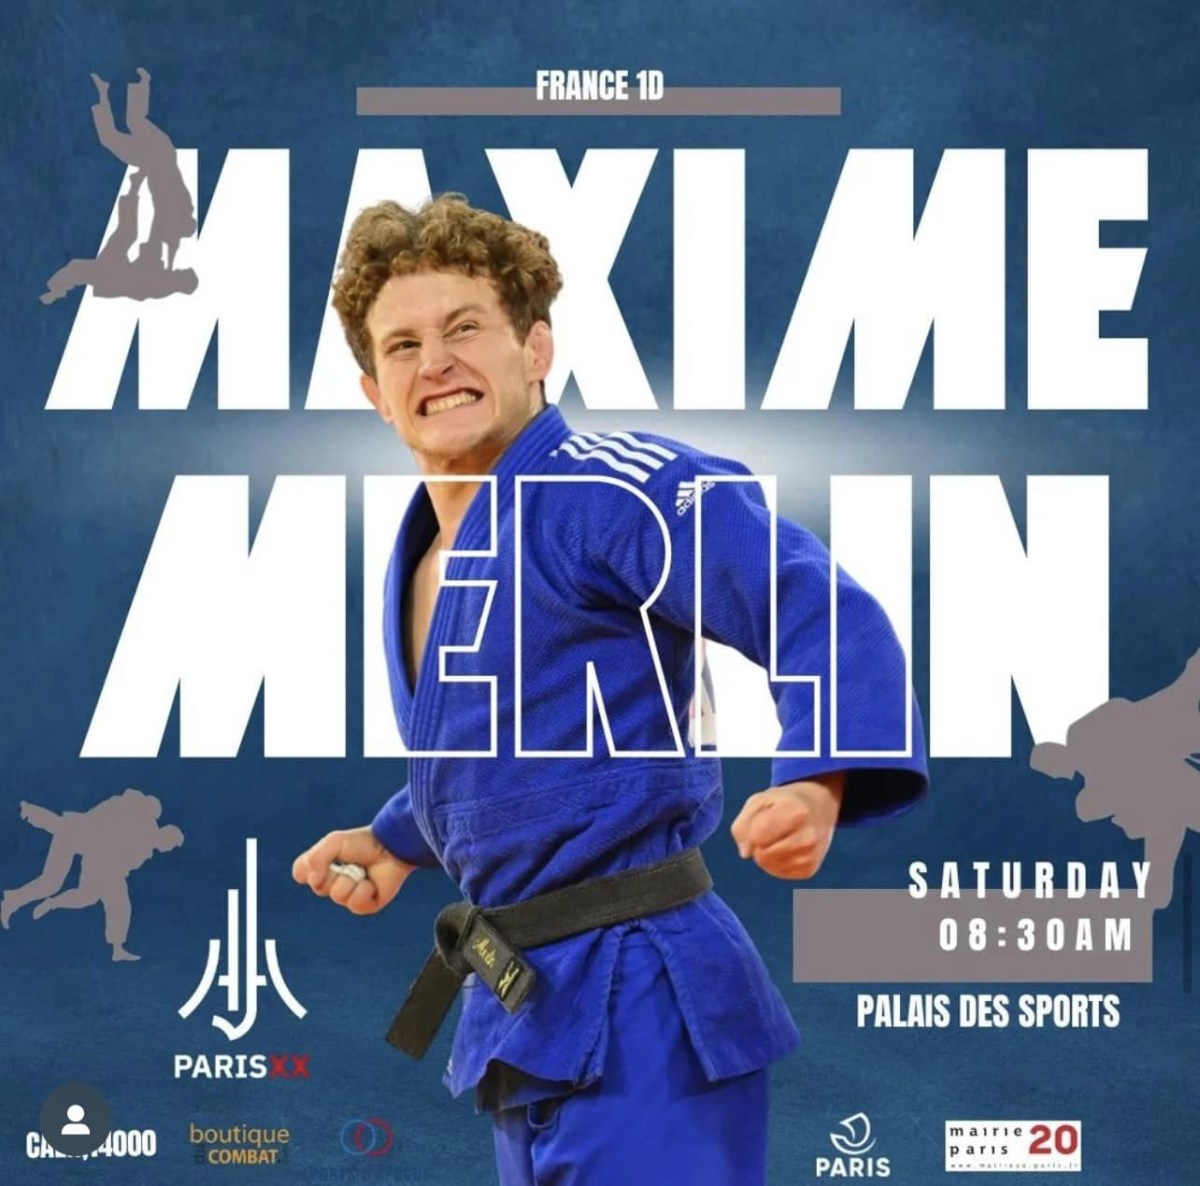 Maxime Merlin